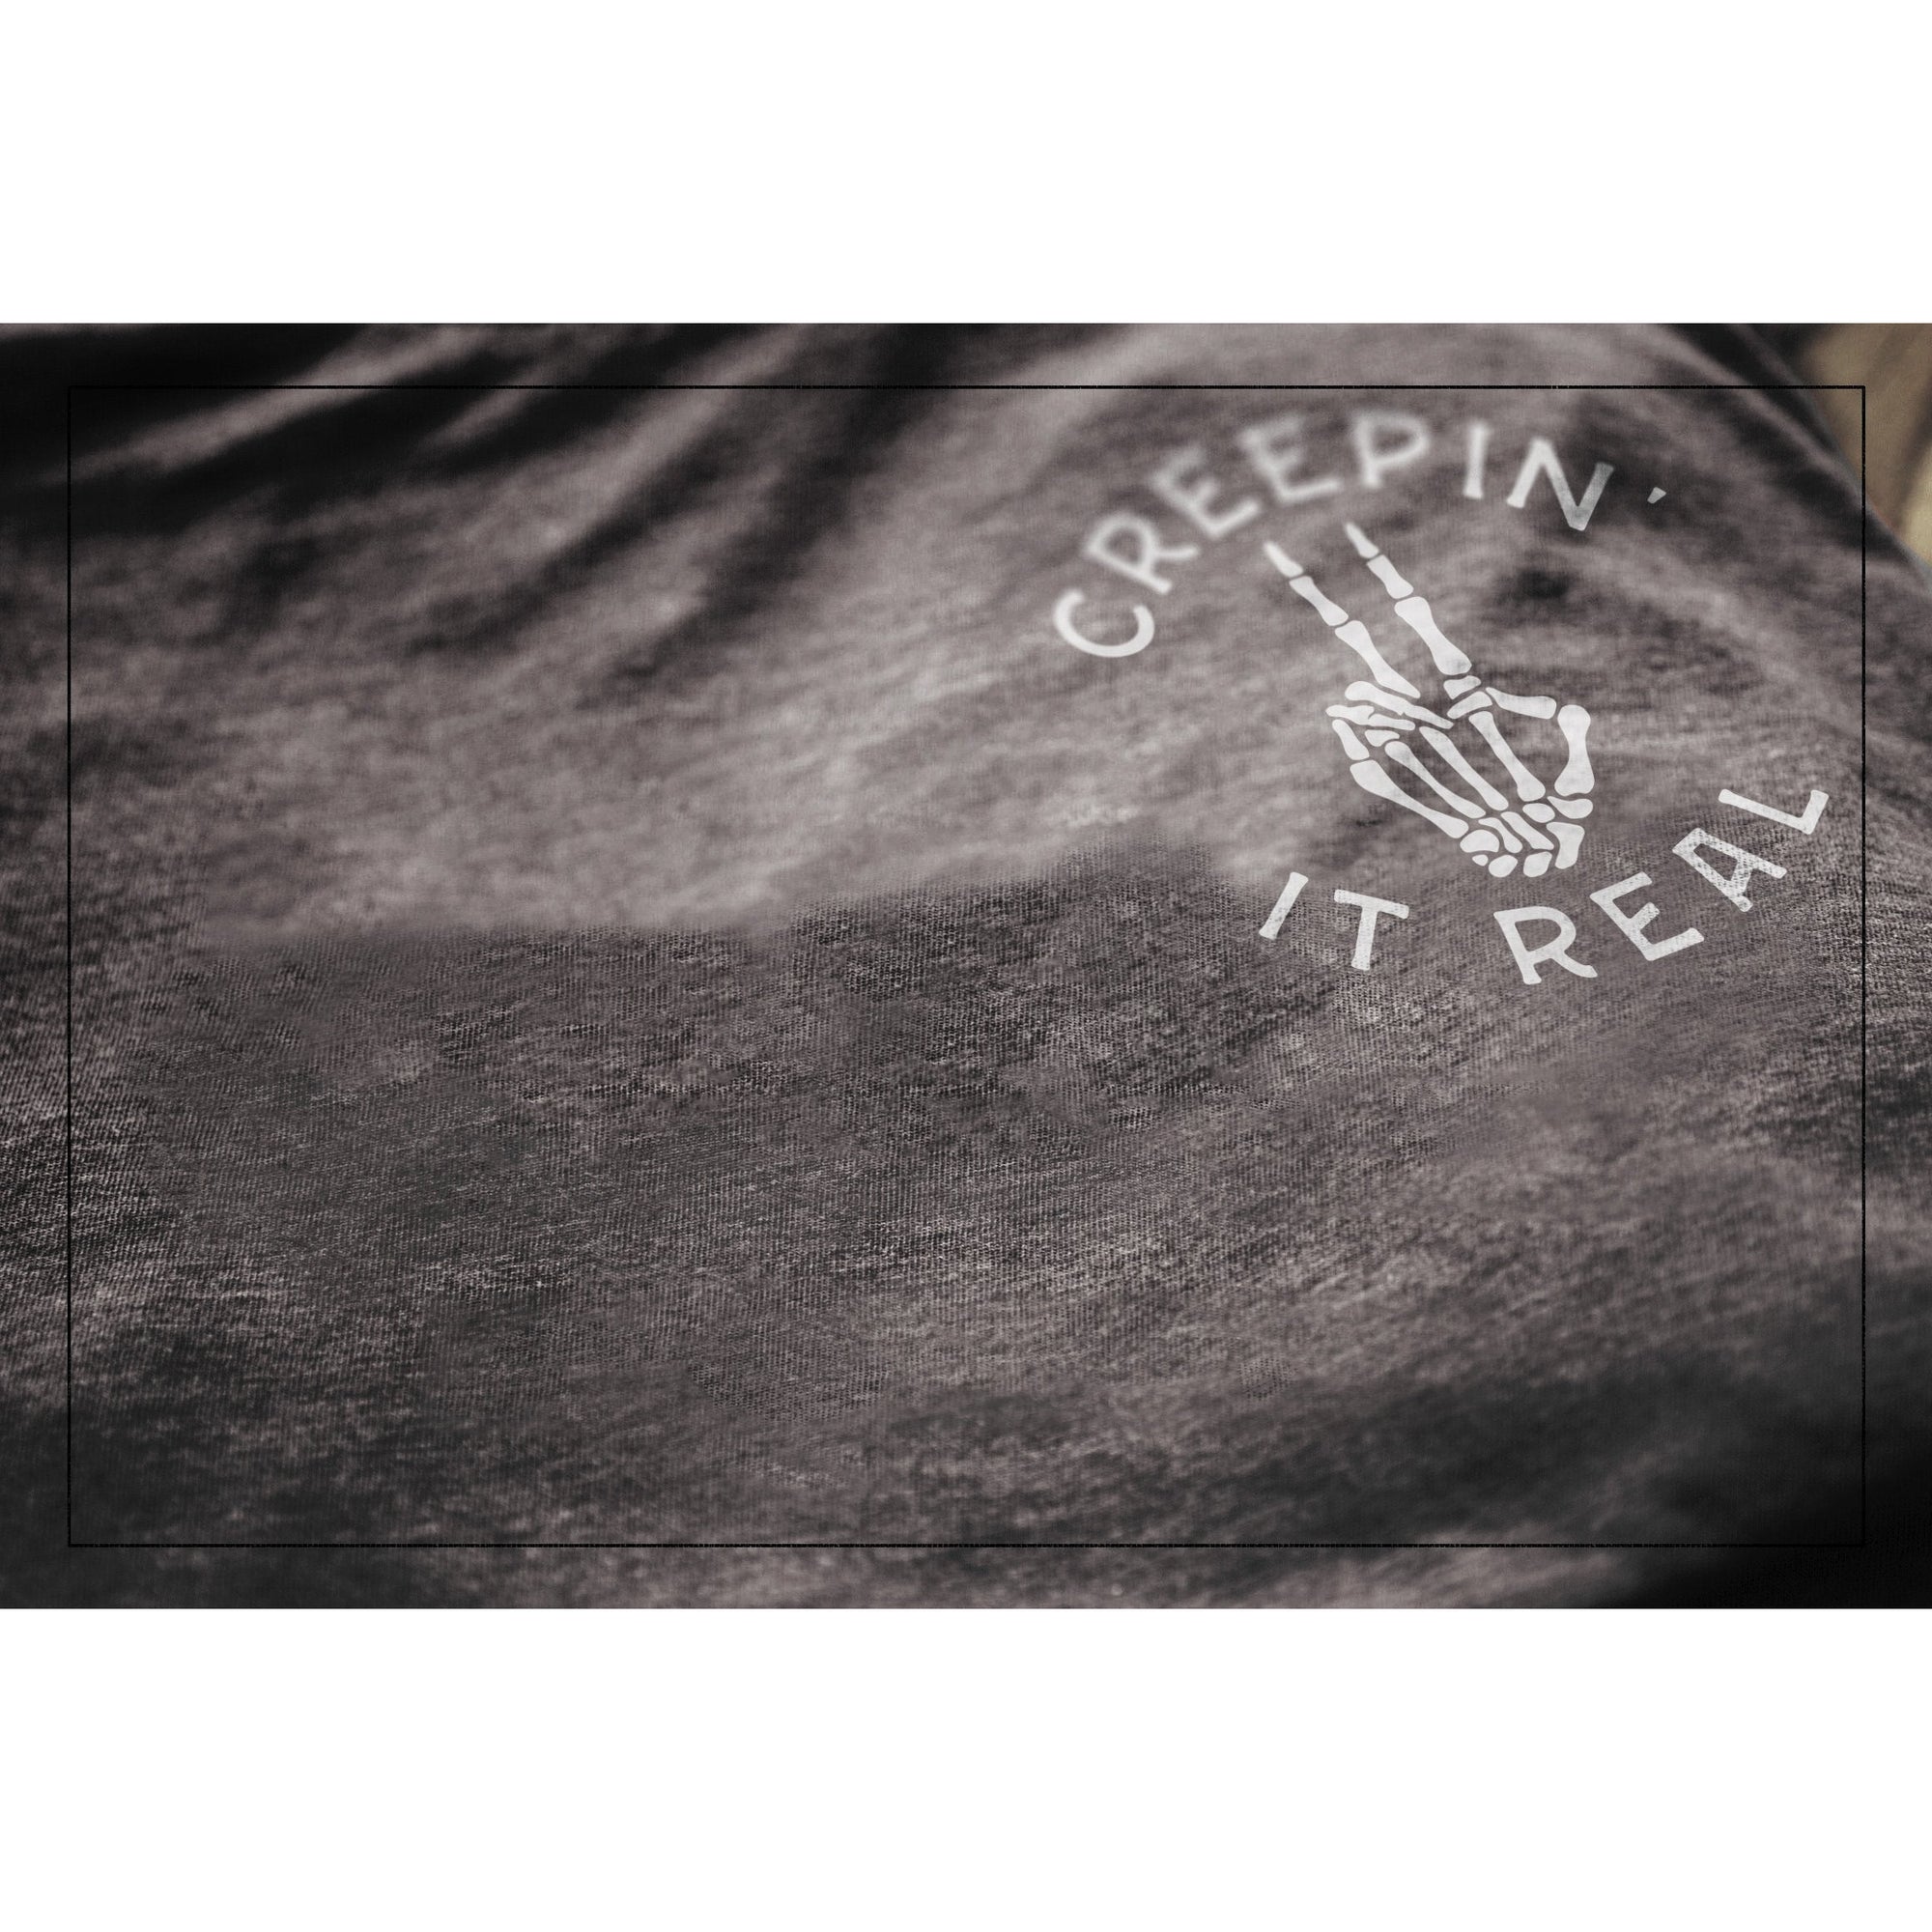 Creepin It Real Charcoal Printed Graphic Men's Crew T-Shirt Tee Closeup Details